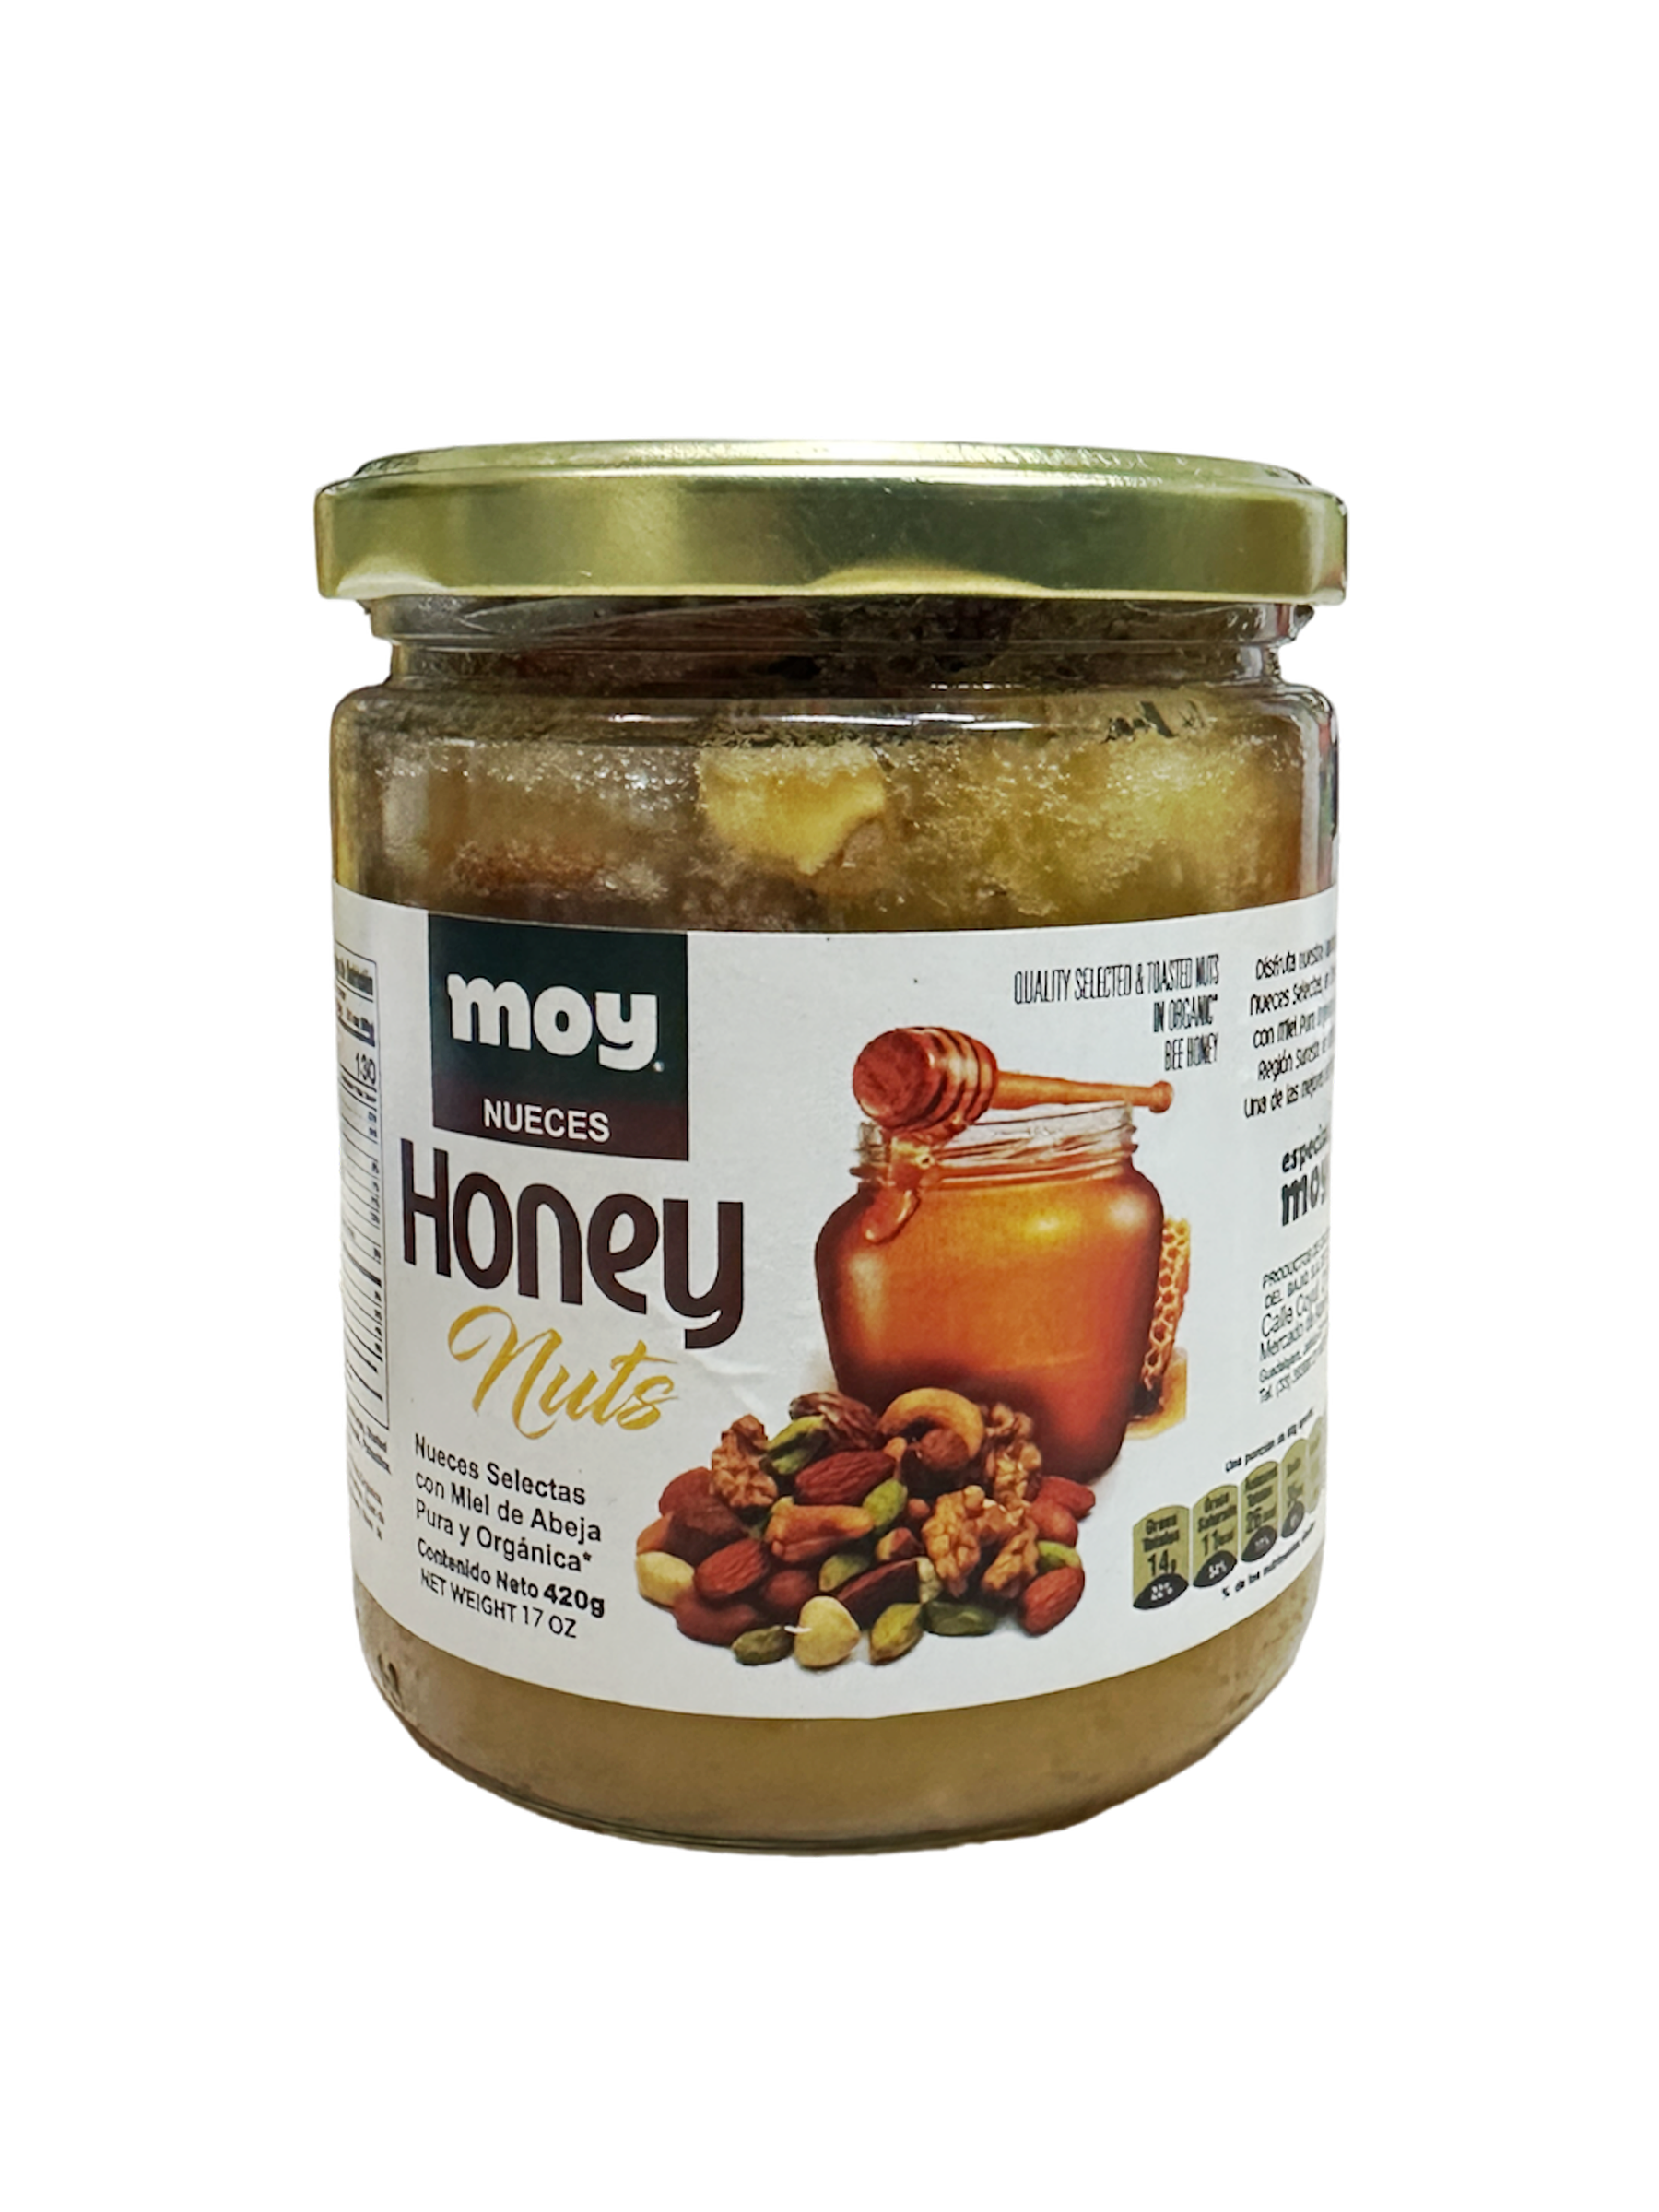 Honey Nuts